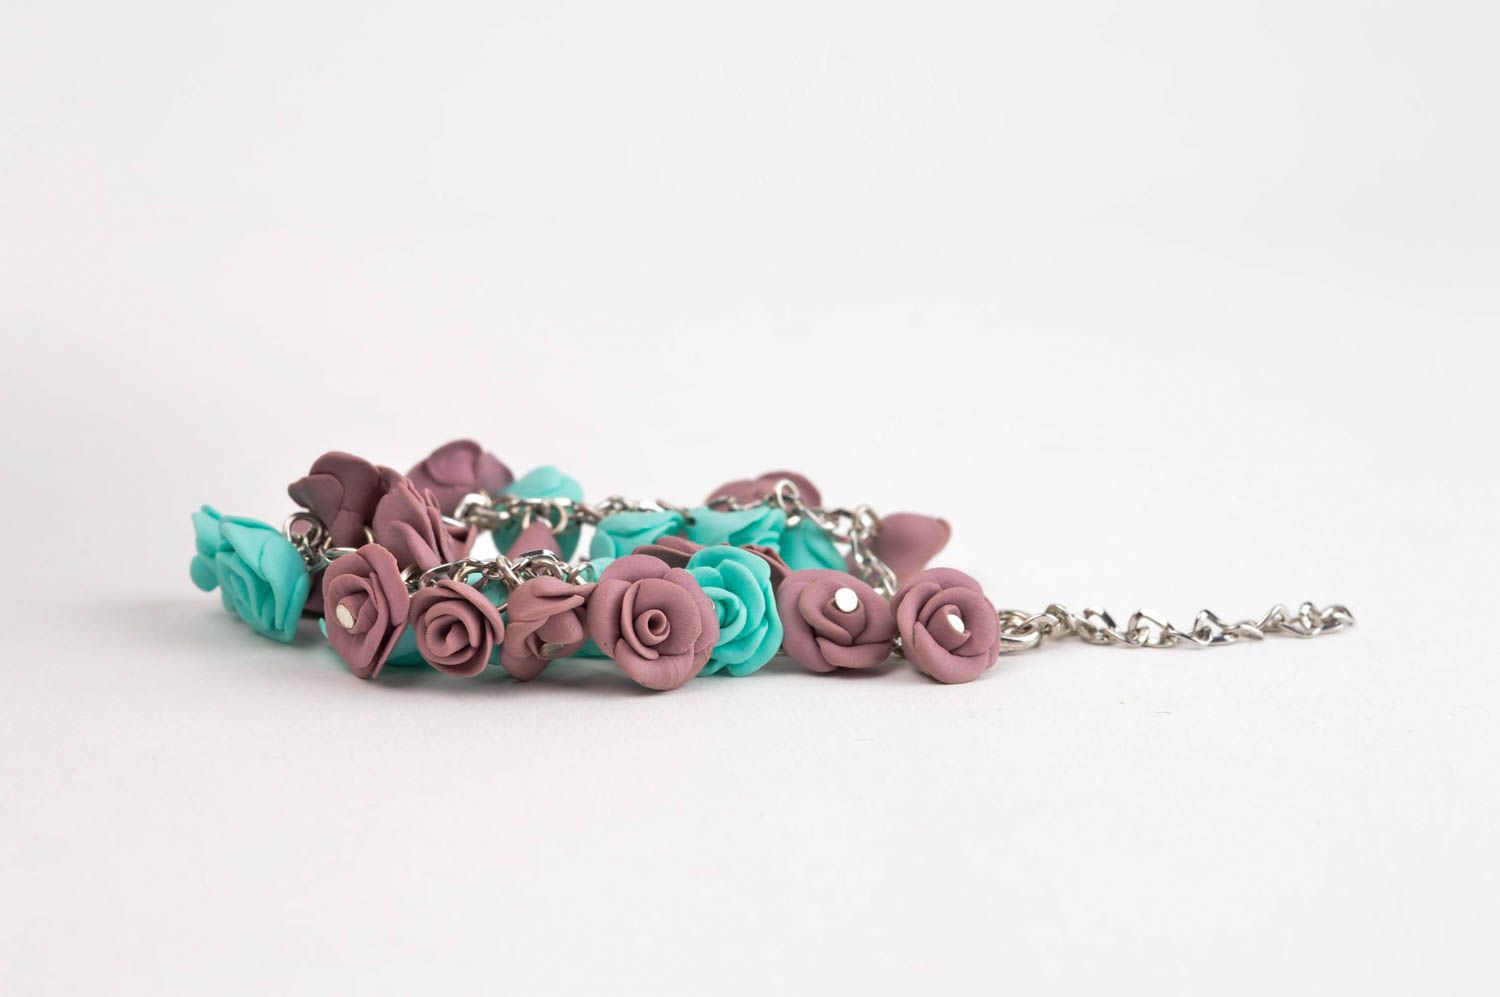 Handmade bracelet flower bracelet clay accessory designer jewelry gift ideas photo 3